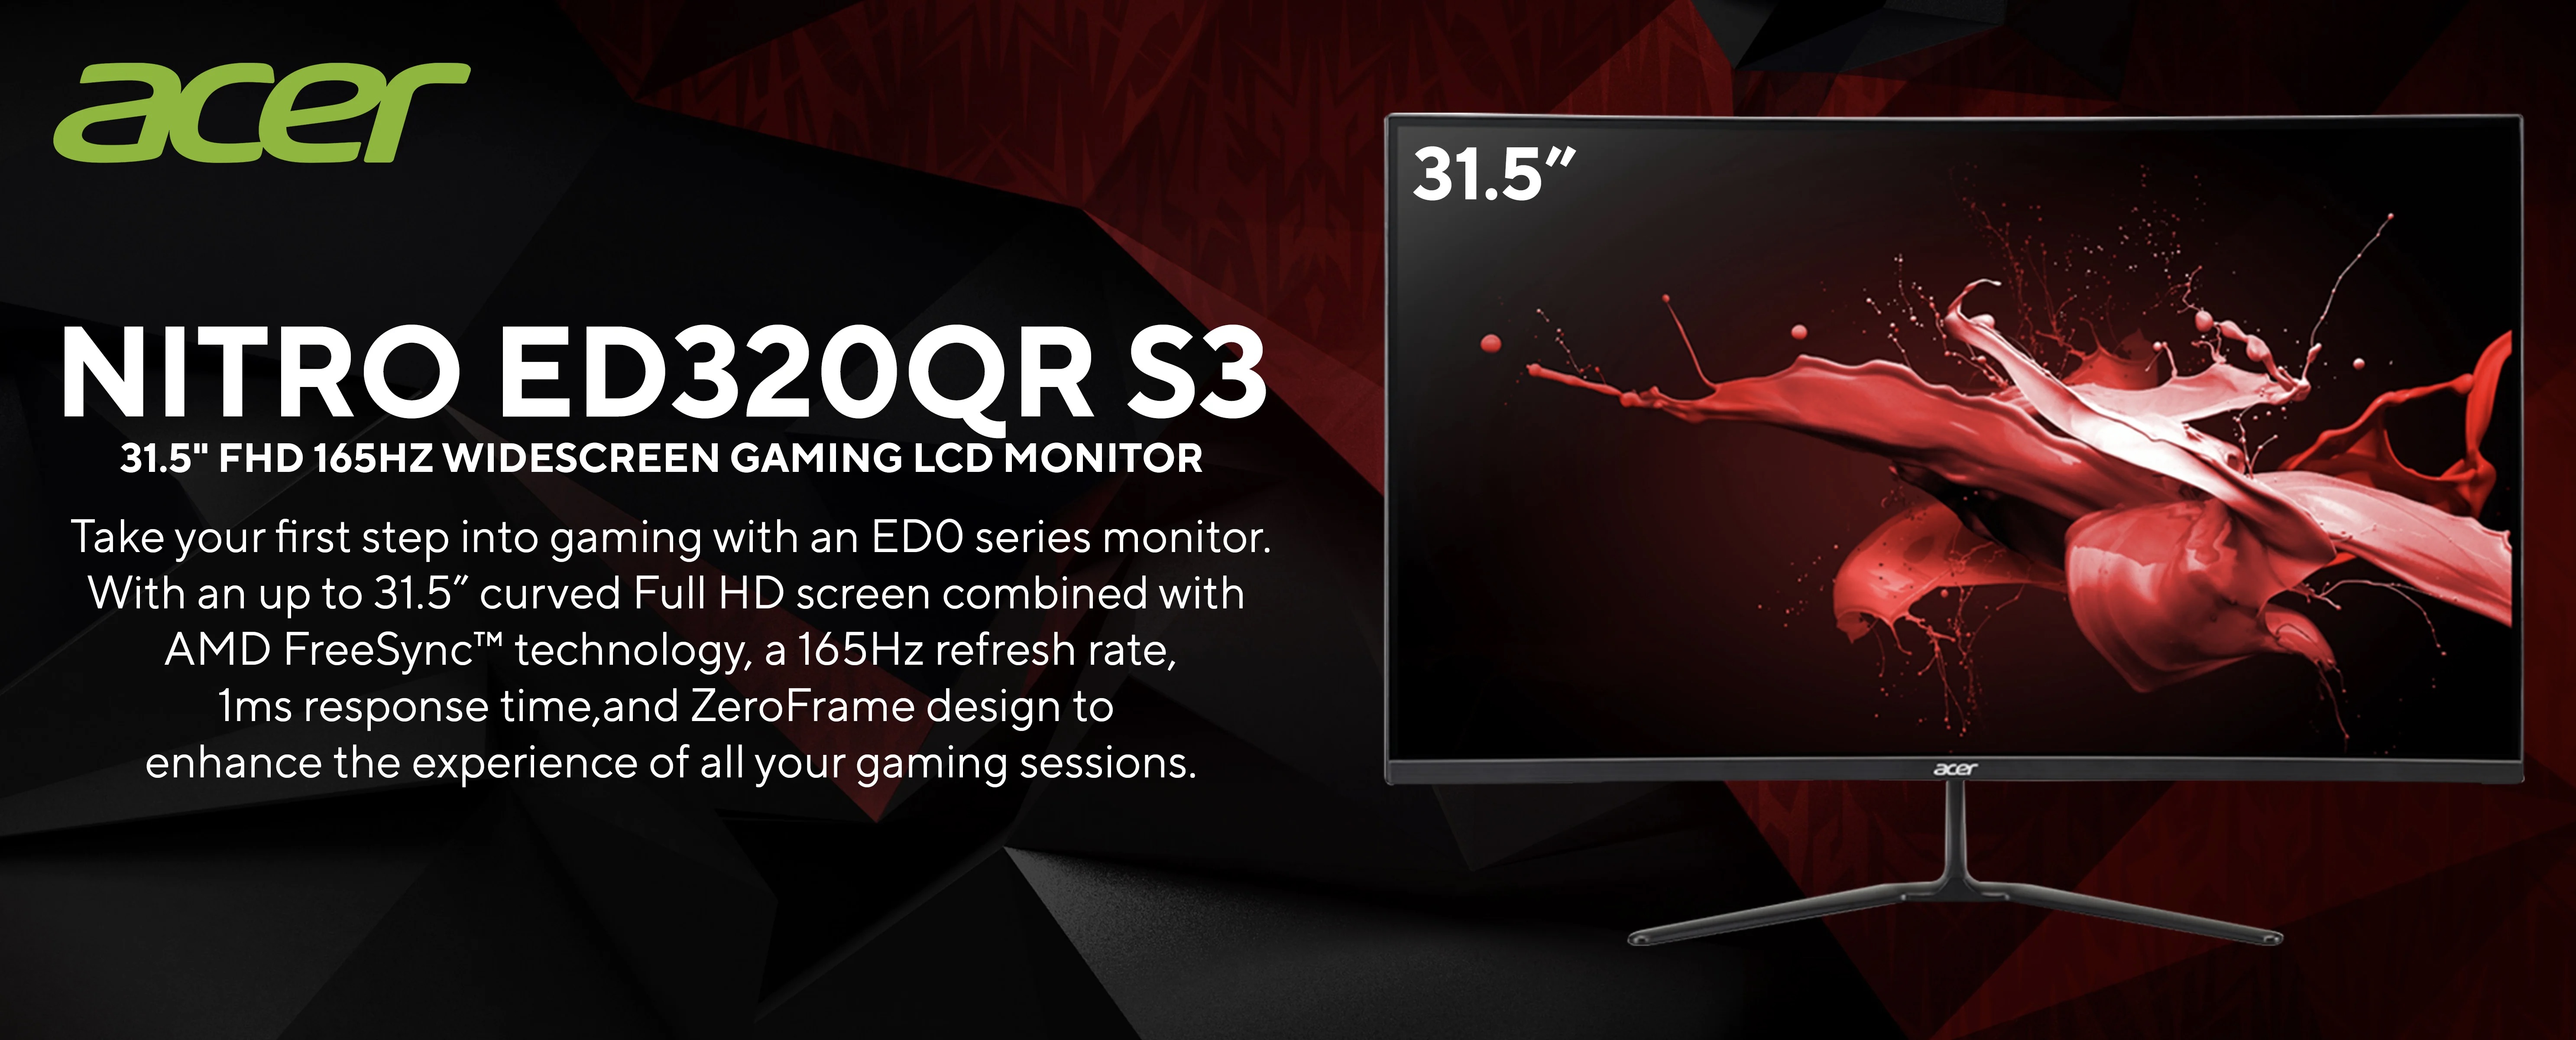 Acer-Nitro-ED320QR-S3-Widescreen-Gaming-LCD-Monitor-31.5-Inches-FHD-1Ms-VRB-165Hz-250-Nits-HDMI-DPort-AMD-FreeSync-Premium-Black-Description